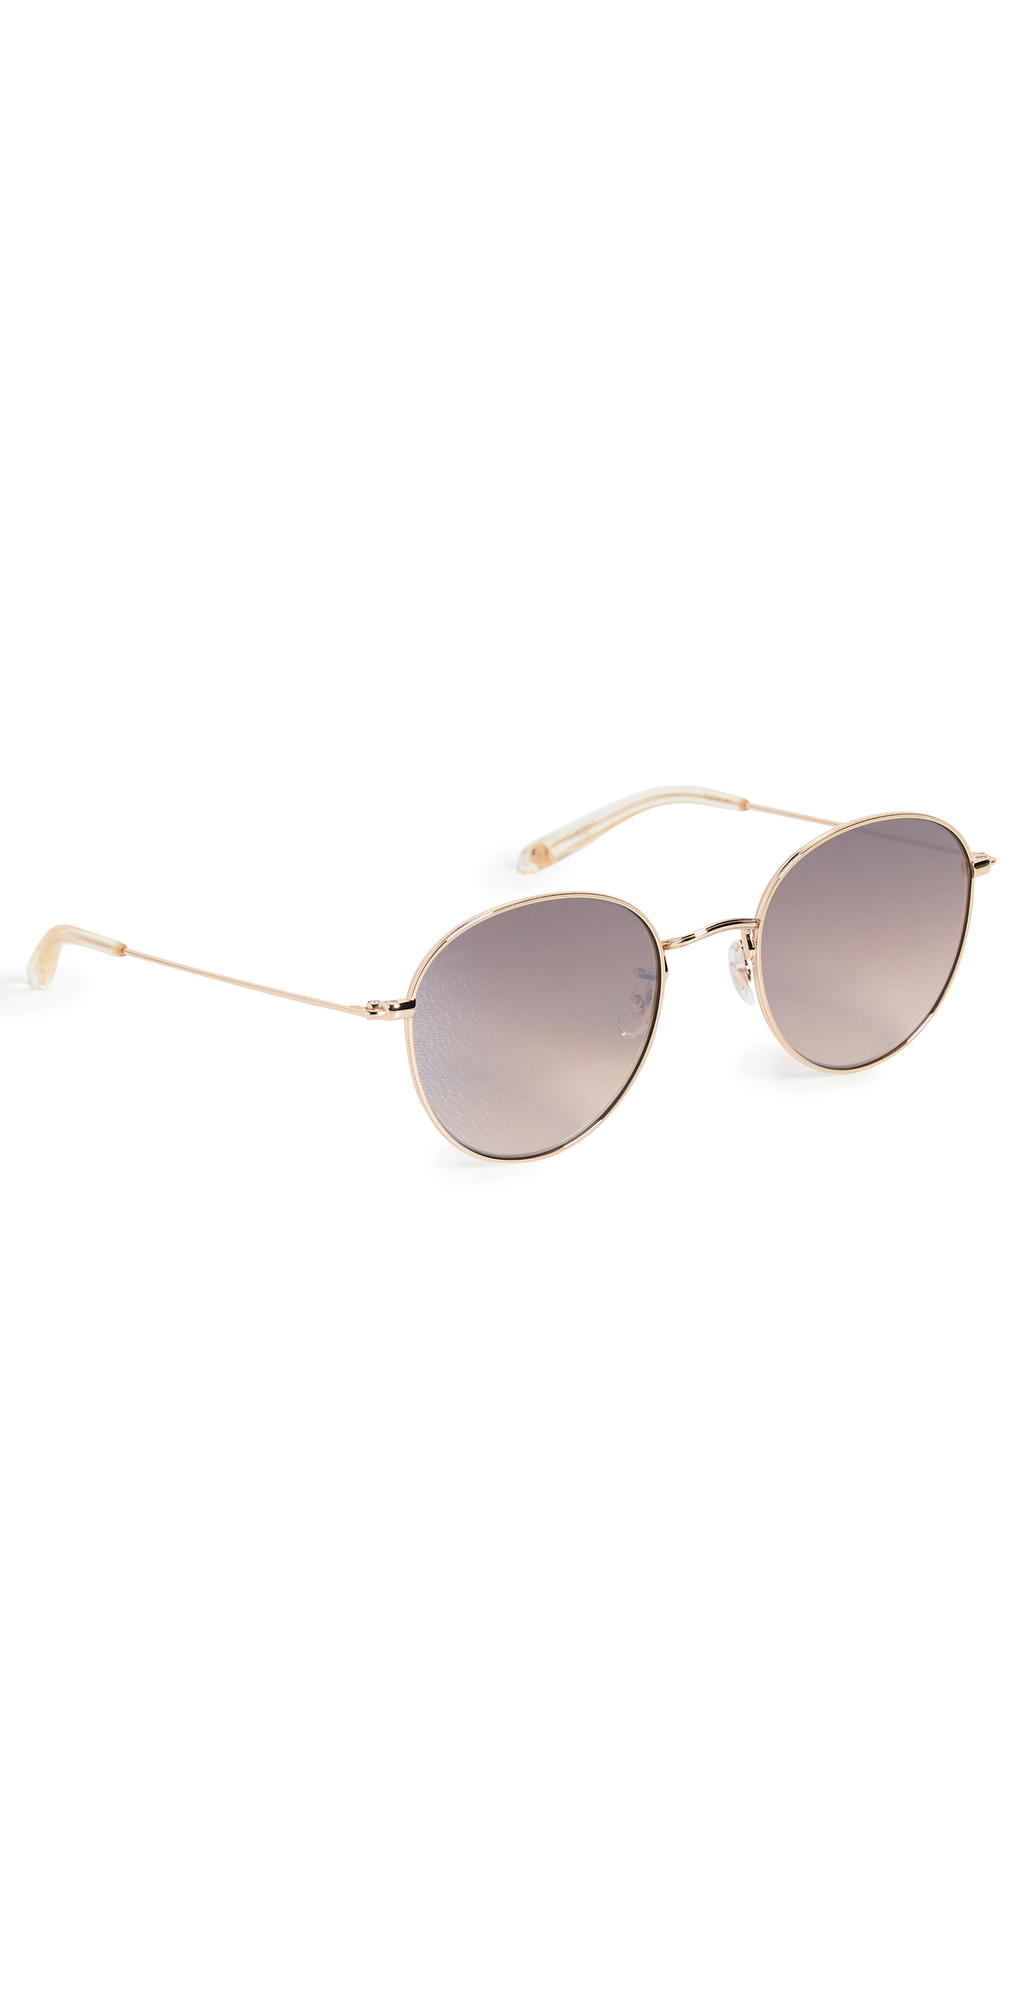 GARRETT LEIGHT Paloma M Sunglasses in gold